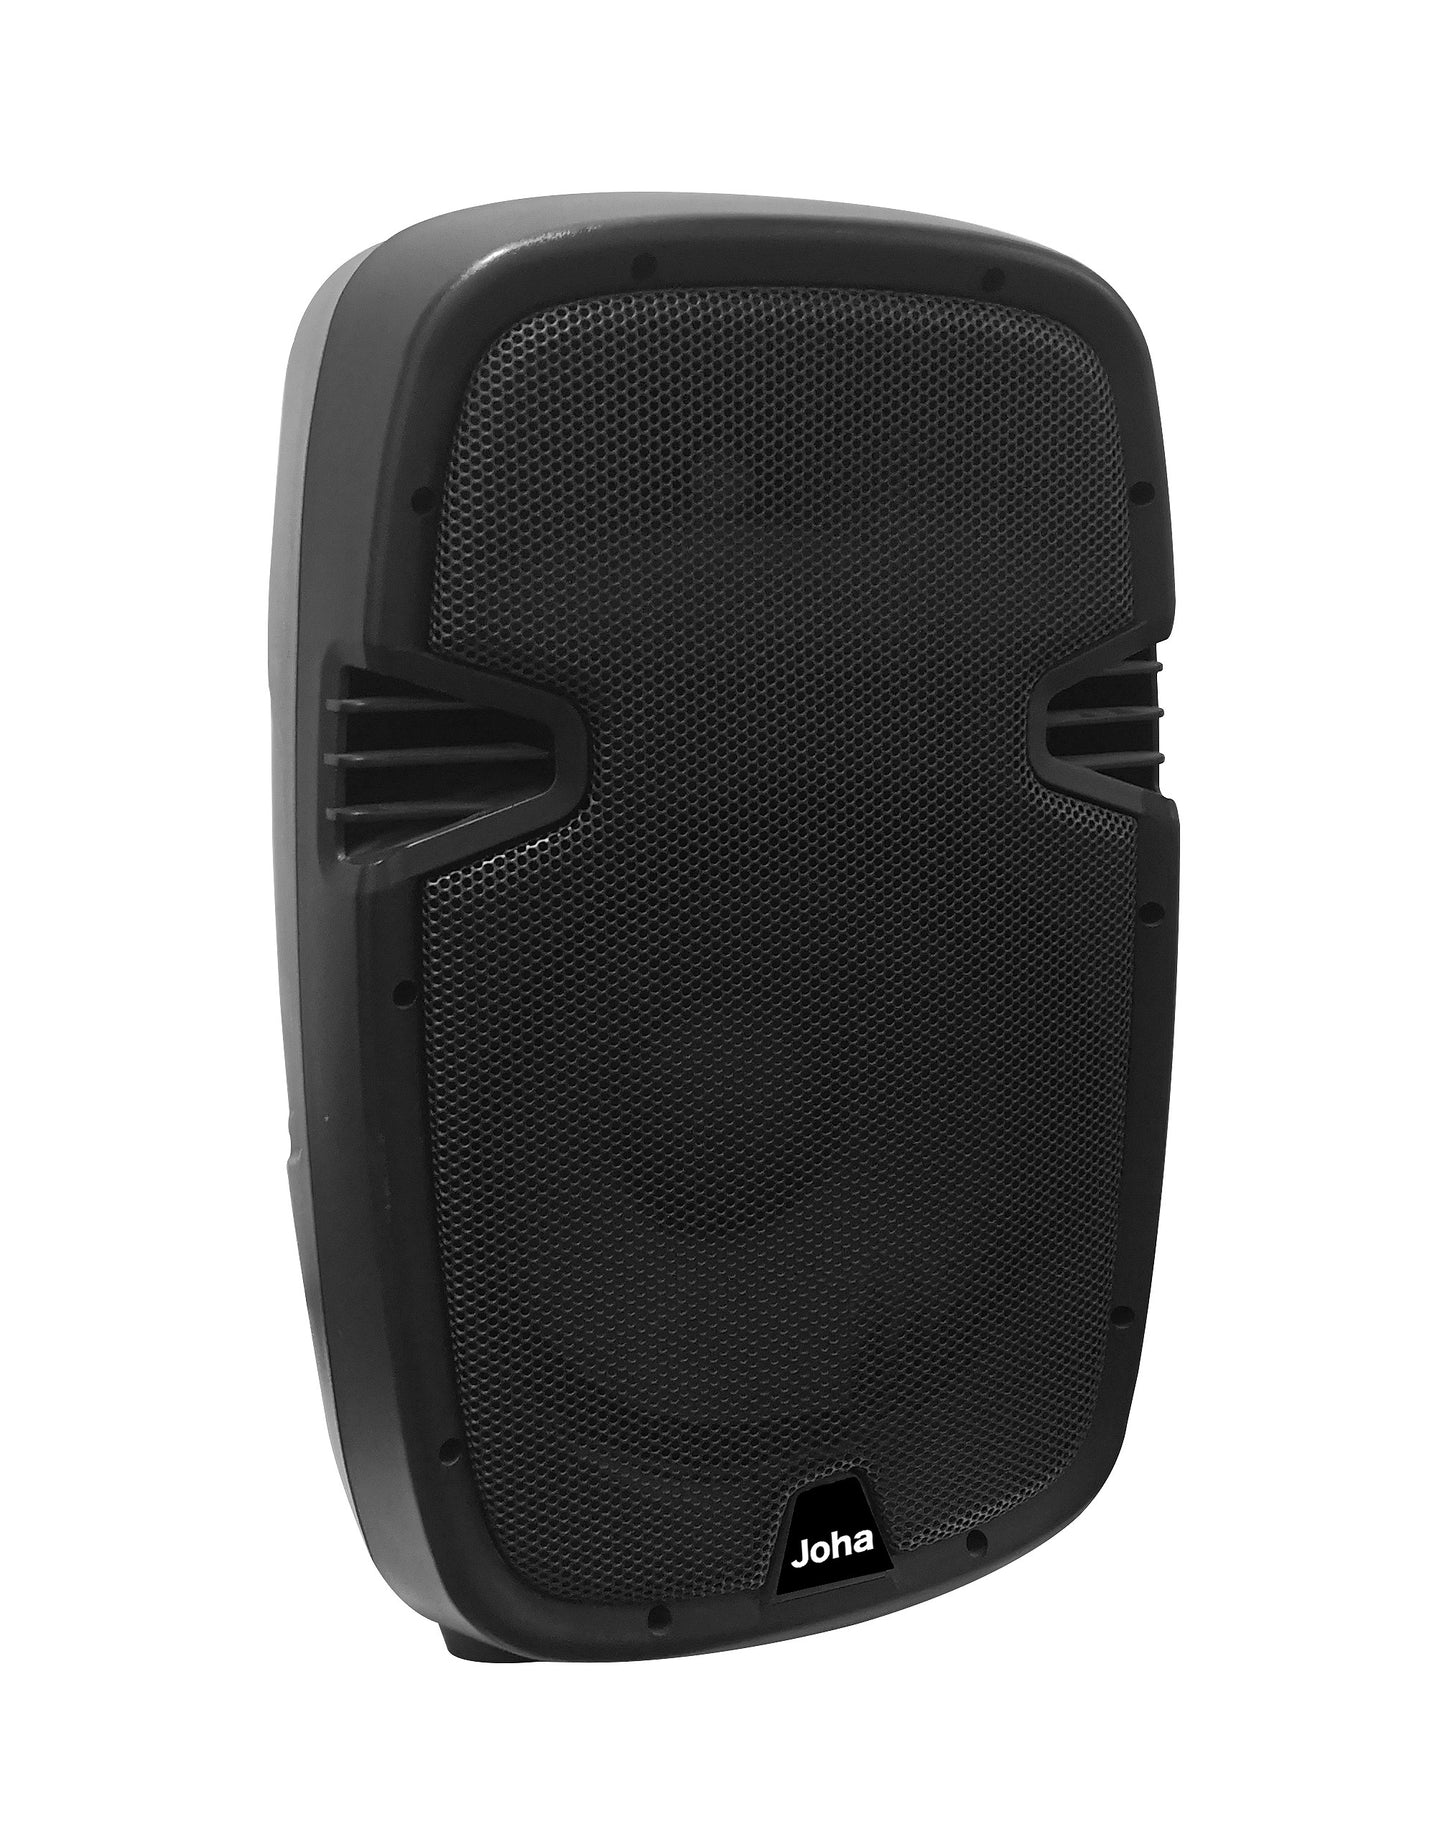 Joha Wireless Speakers (JOHA-2100)